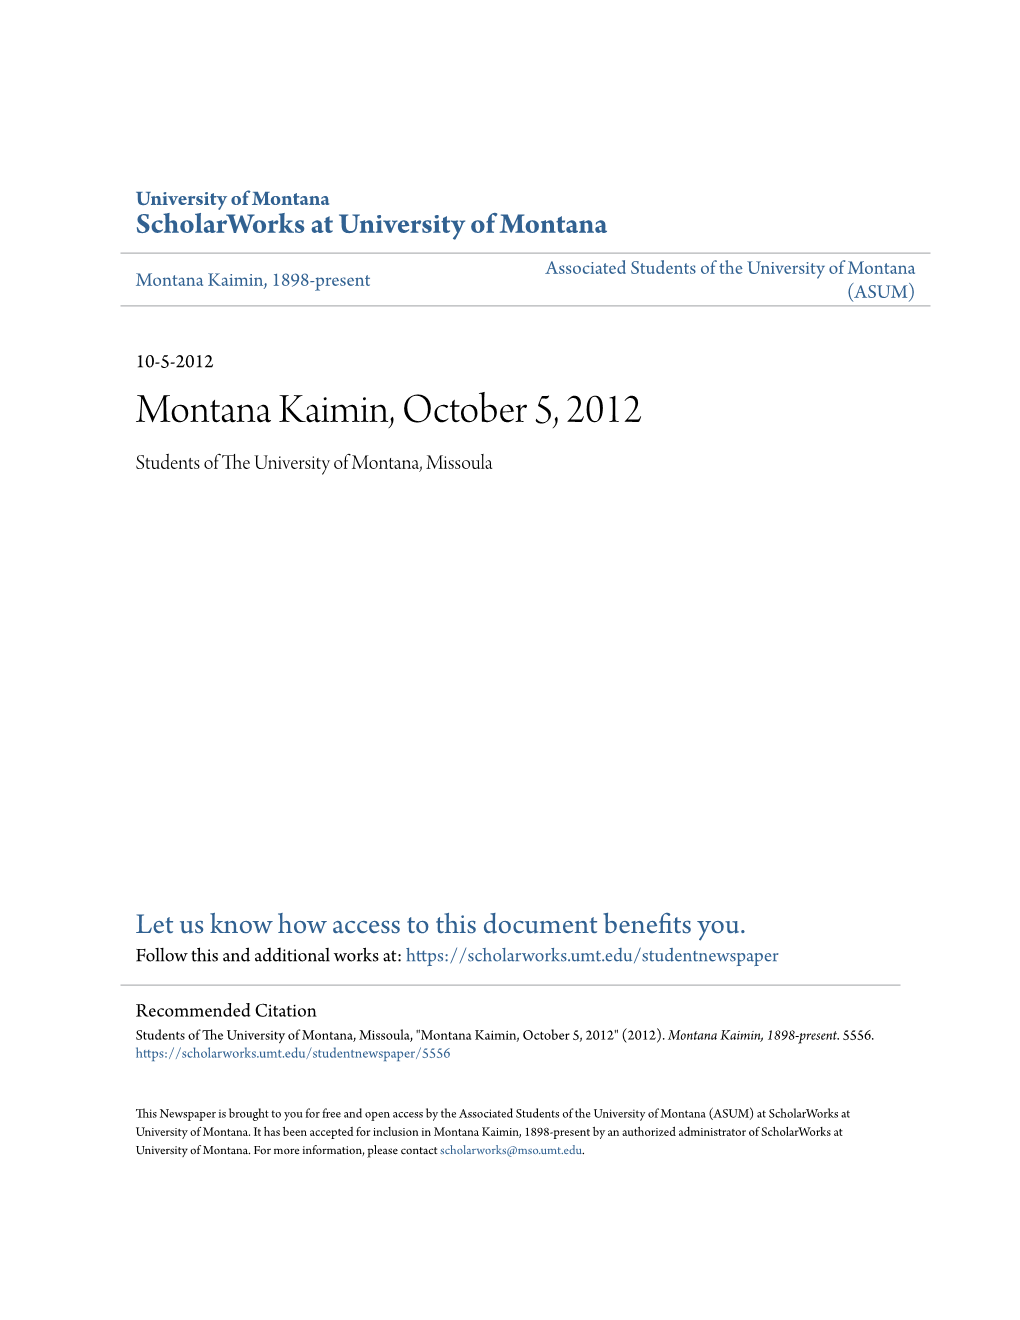 Montana Kaimin, October 5, 2012 Students of the Niu Versity of Montana, Missoula